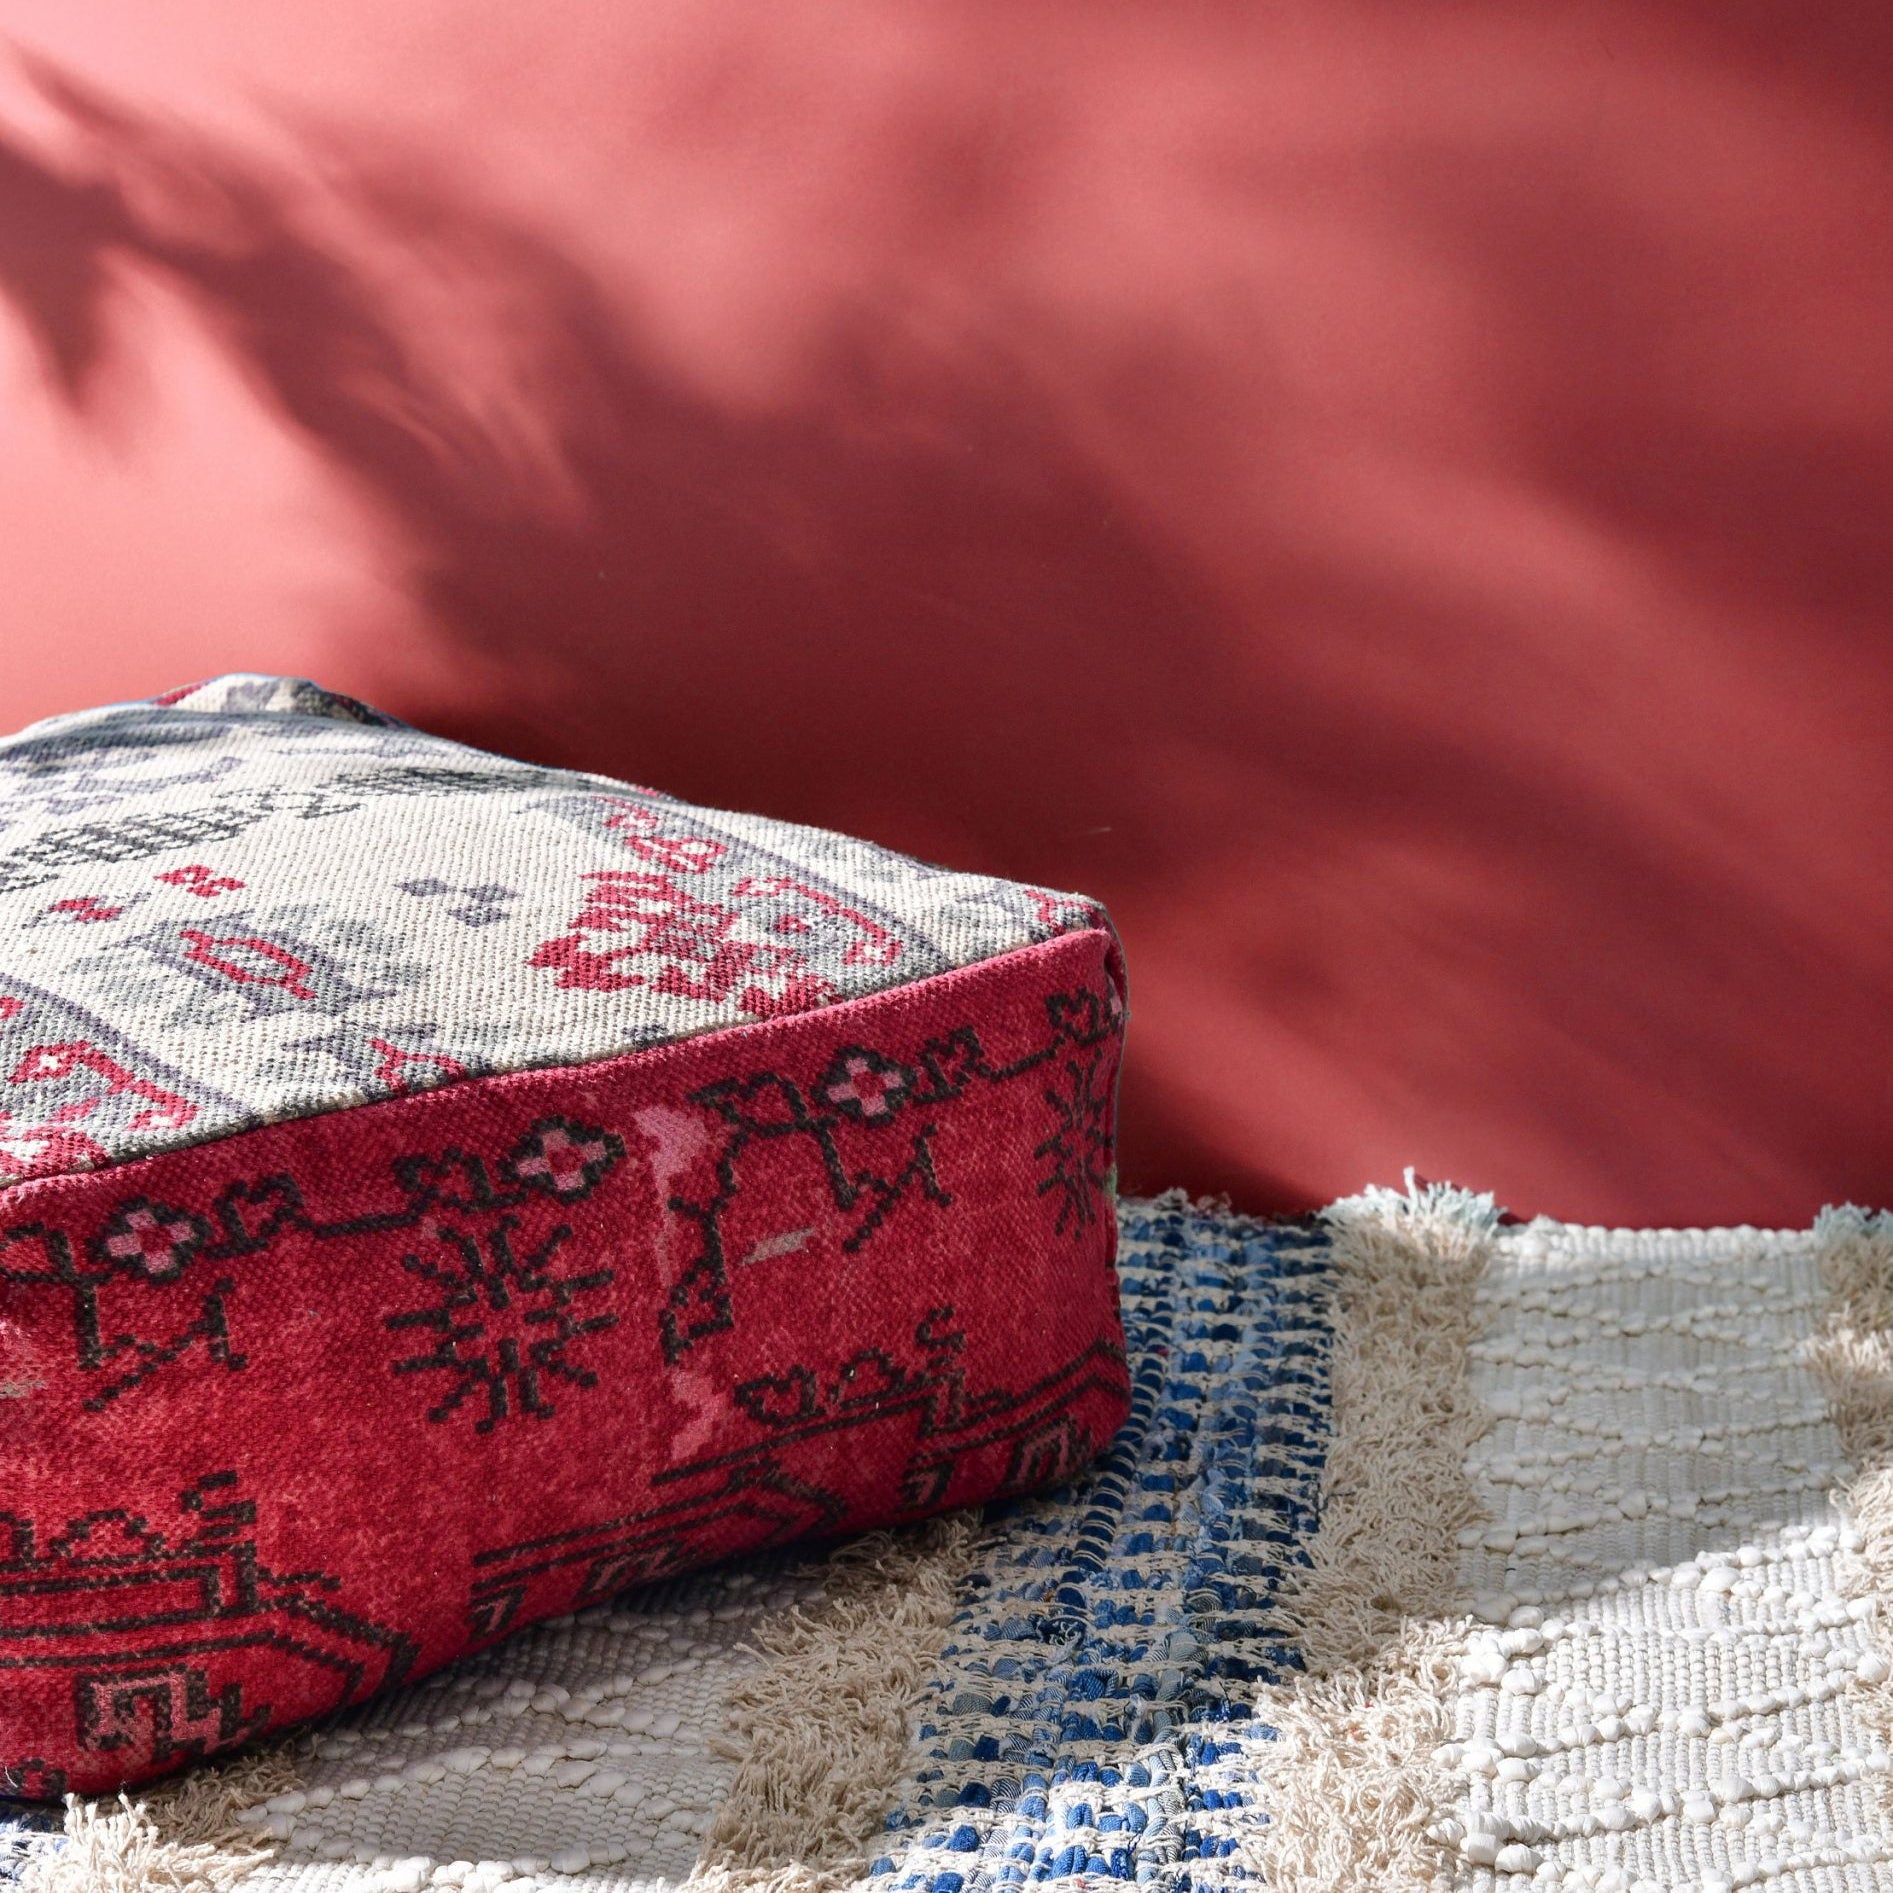 Stunning Moroccan Cushion, Handwoven kilim pouf, Beanbag, Yoga Meditation Cushion, Linen Connections,  Ottoman, Footstool, Home Decor Gift